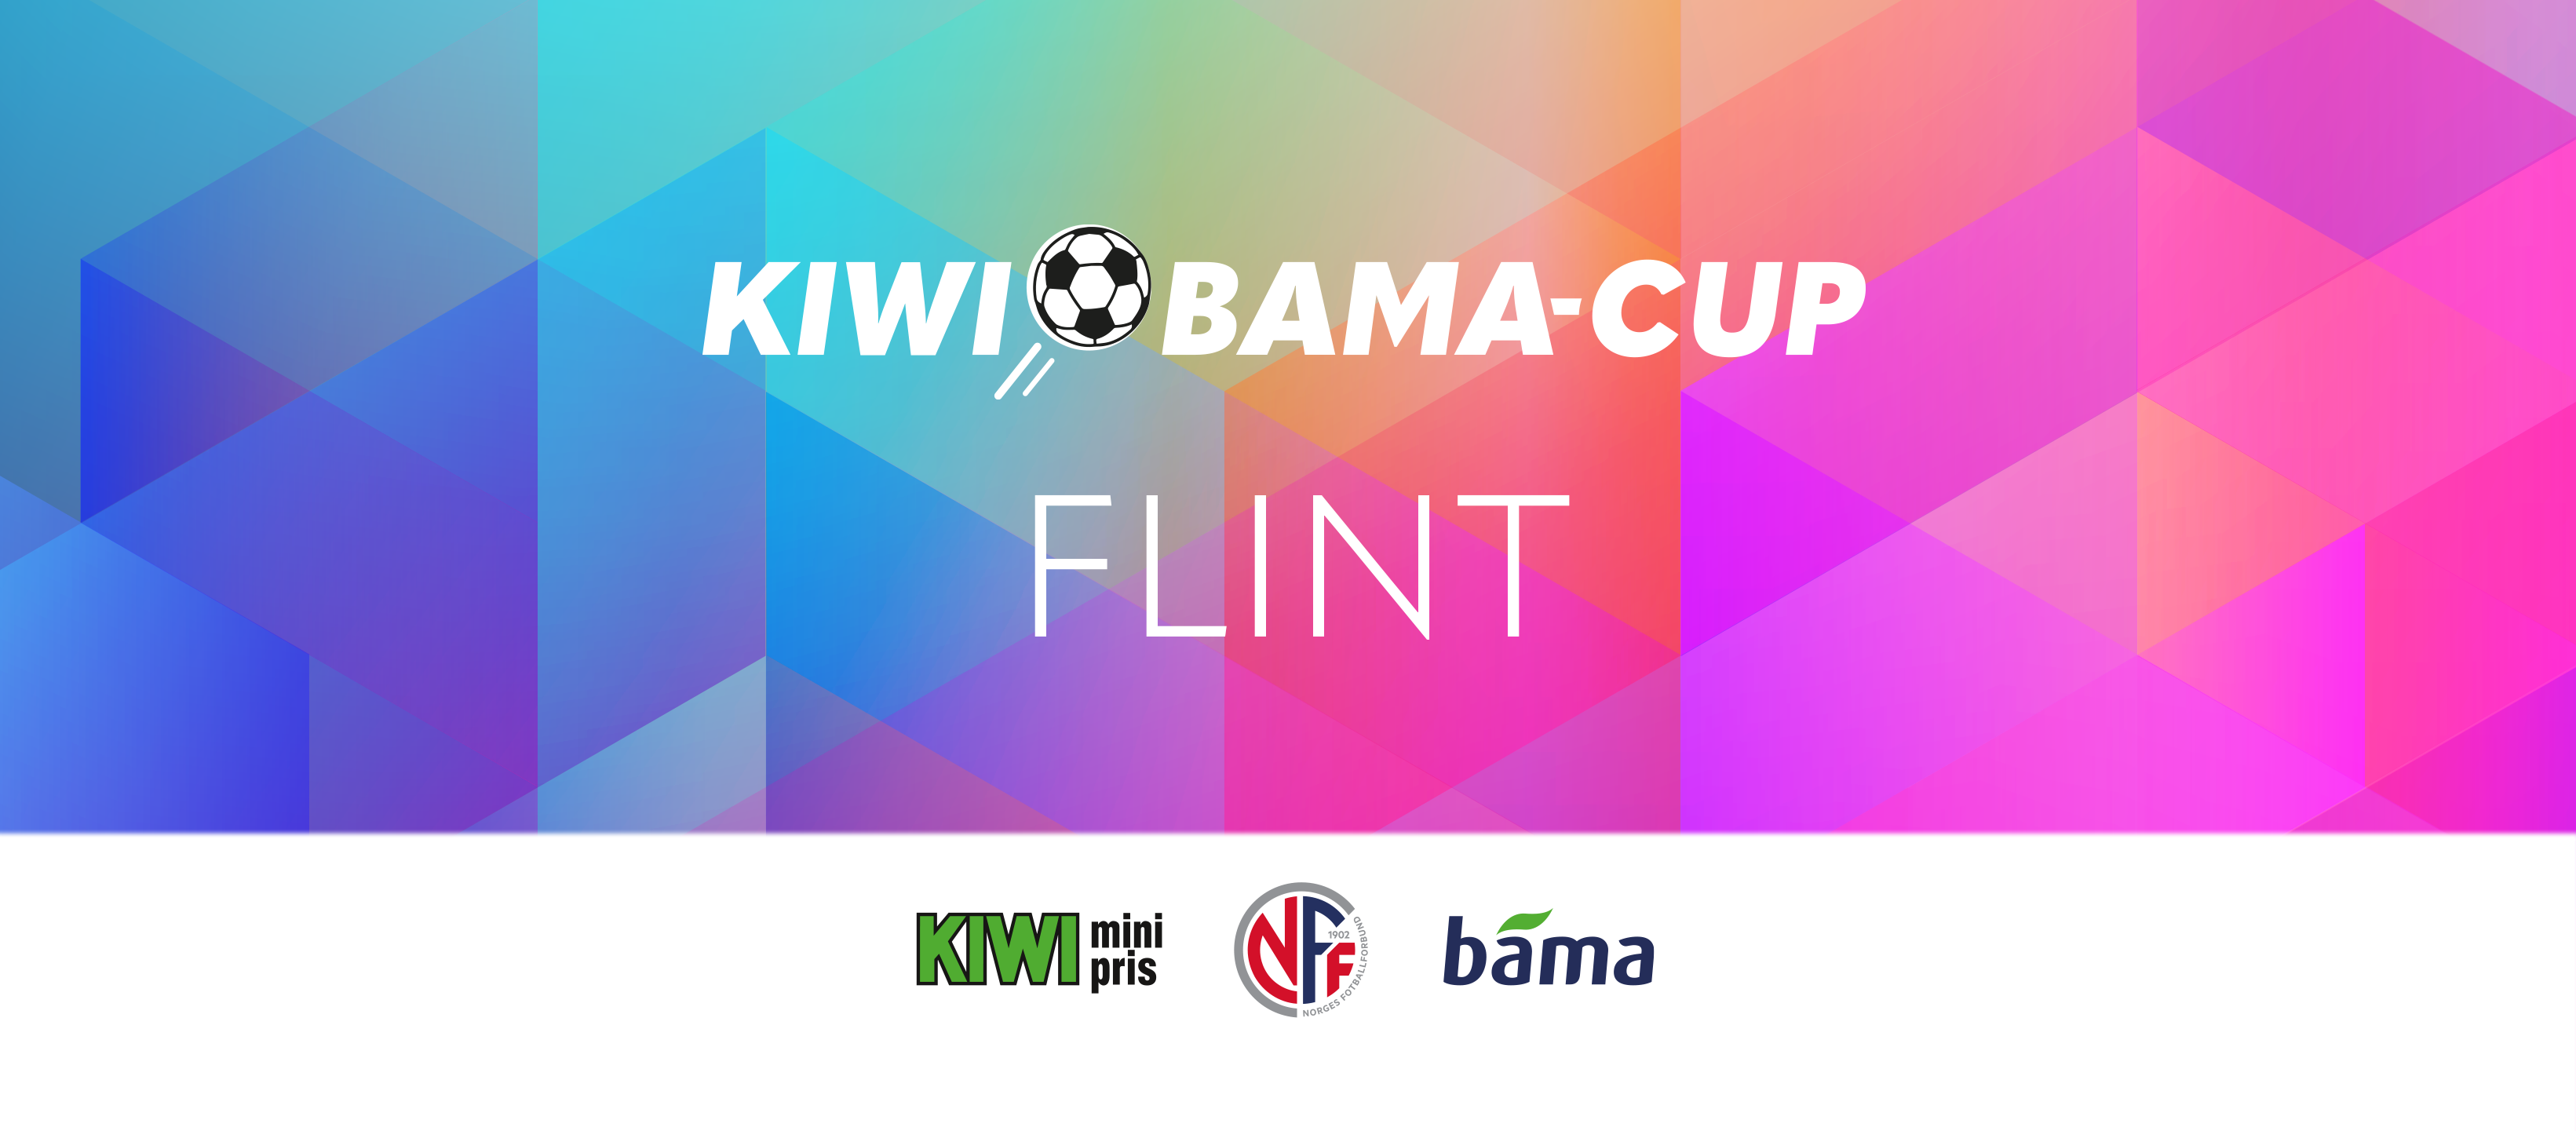 FB-BANNER KIWI-BAMA-Cup - Flint.png